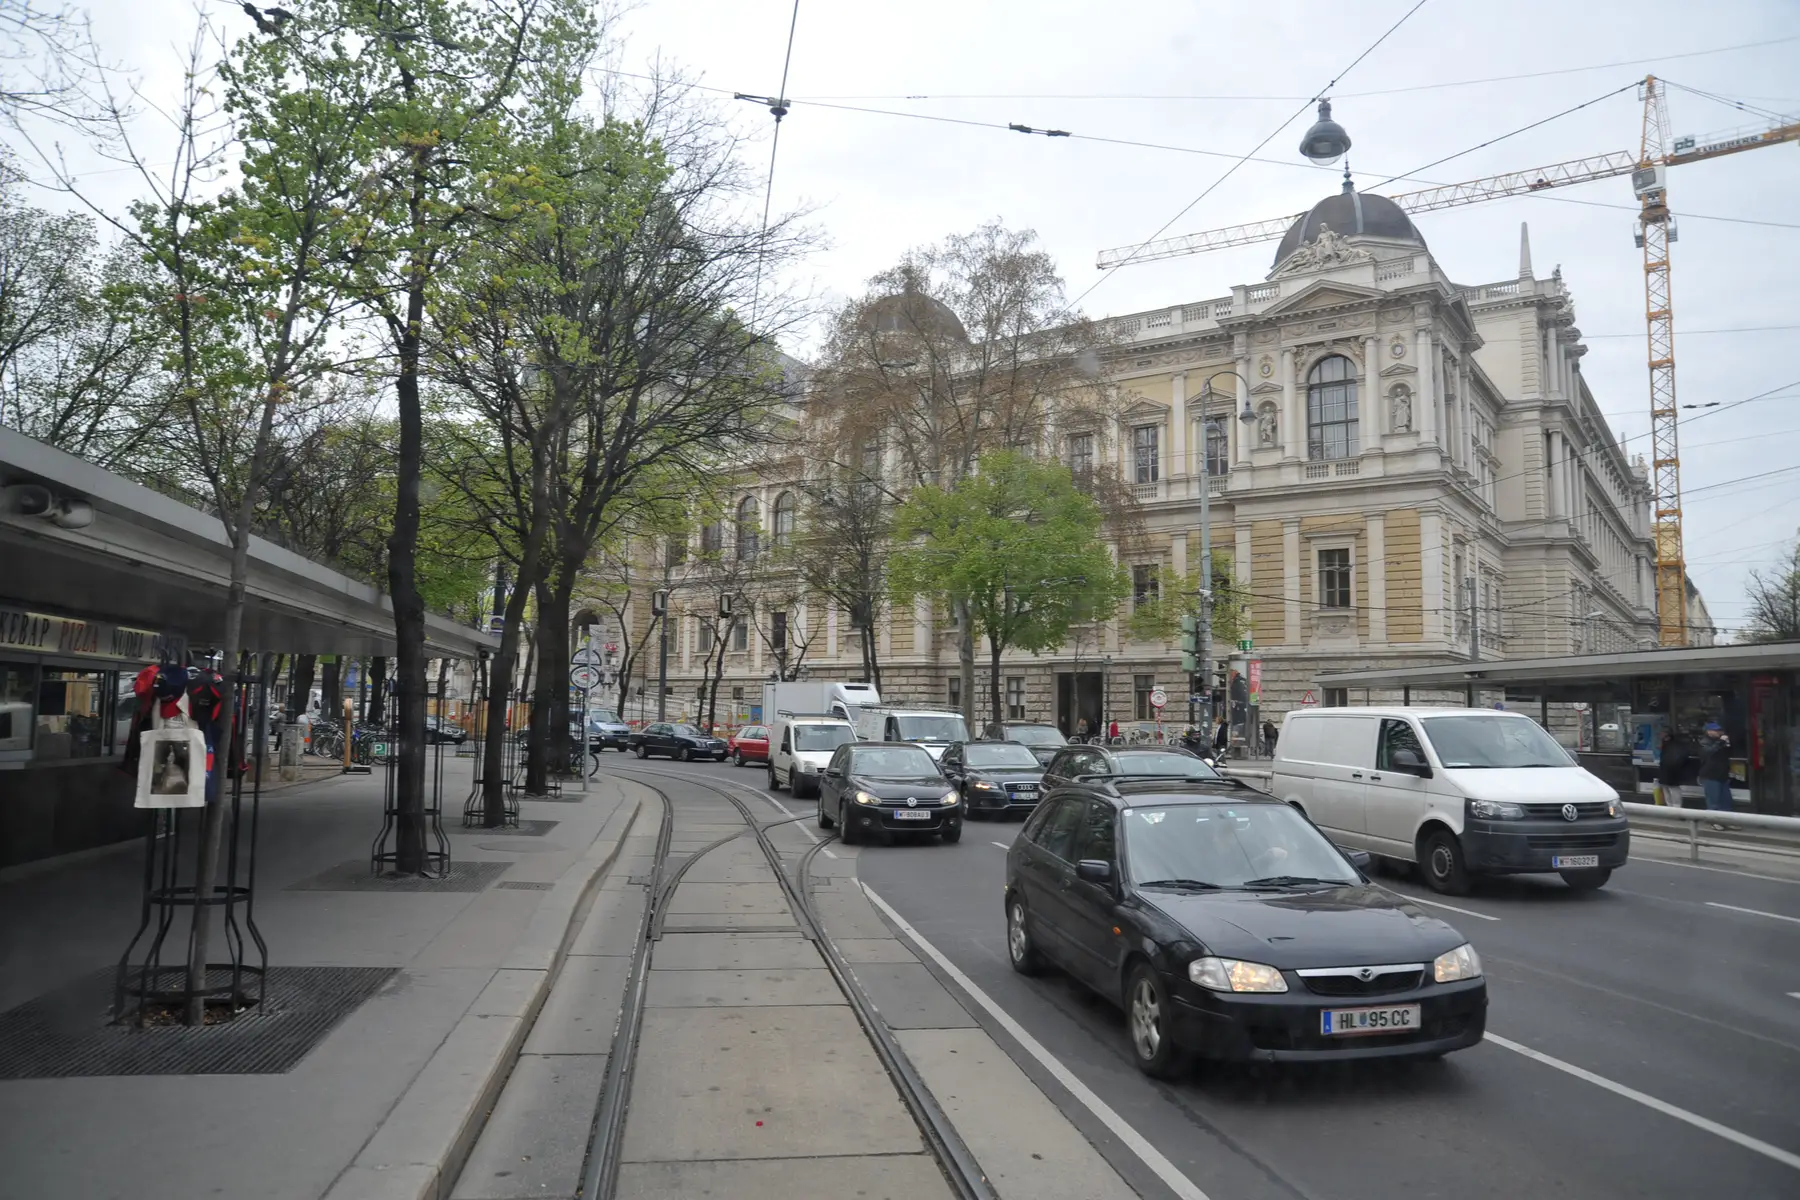 A busy street in Vienna